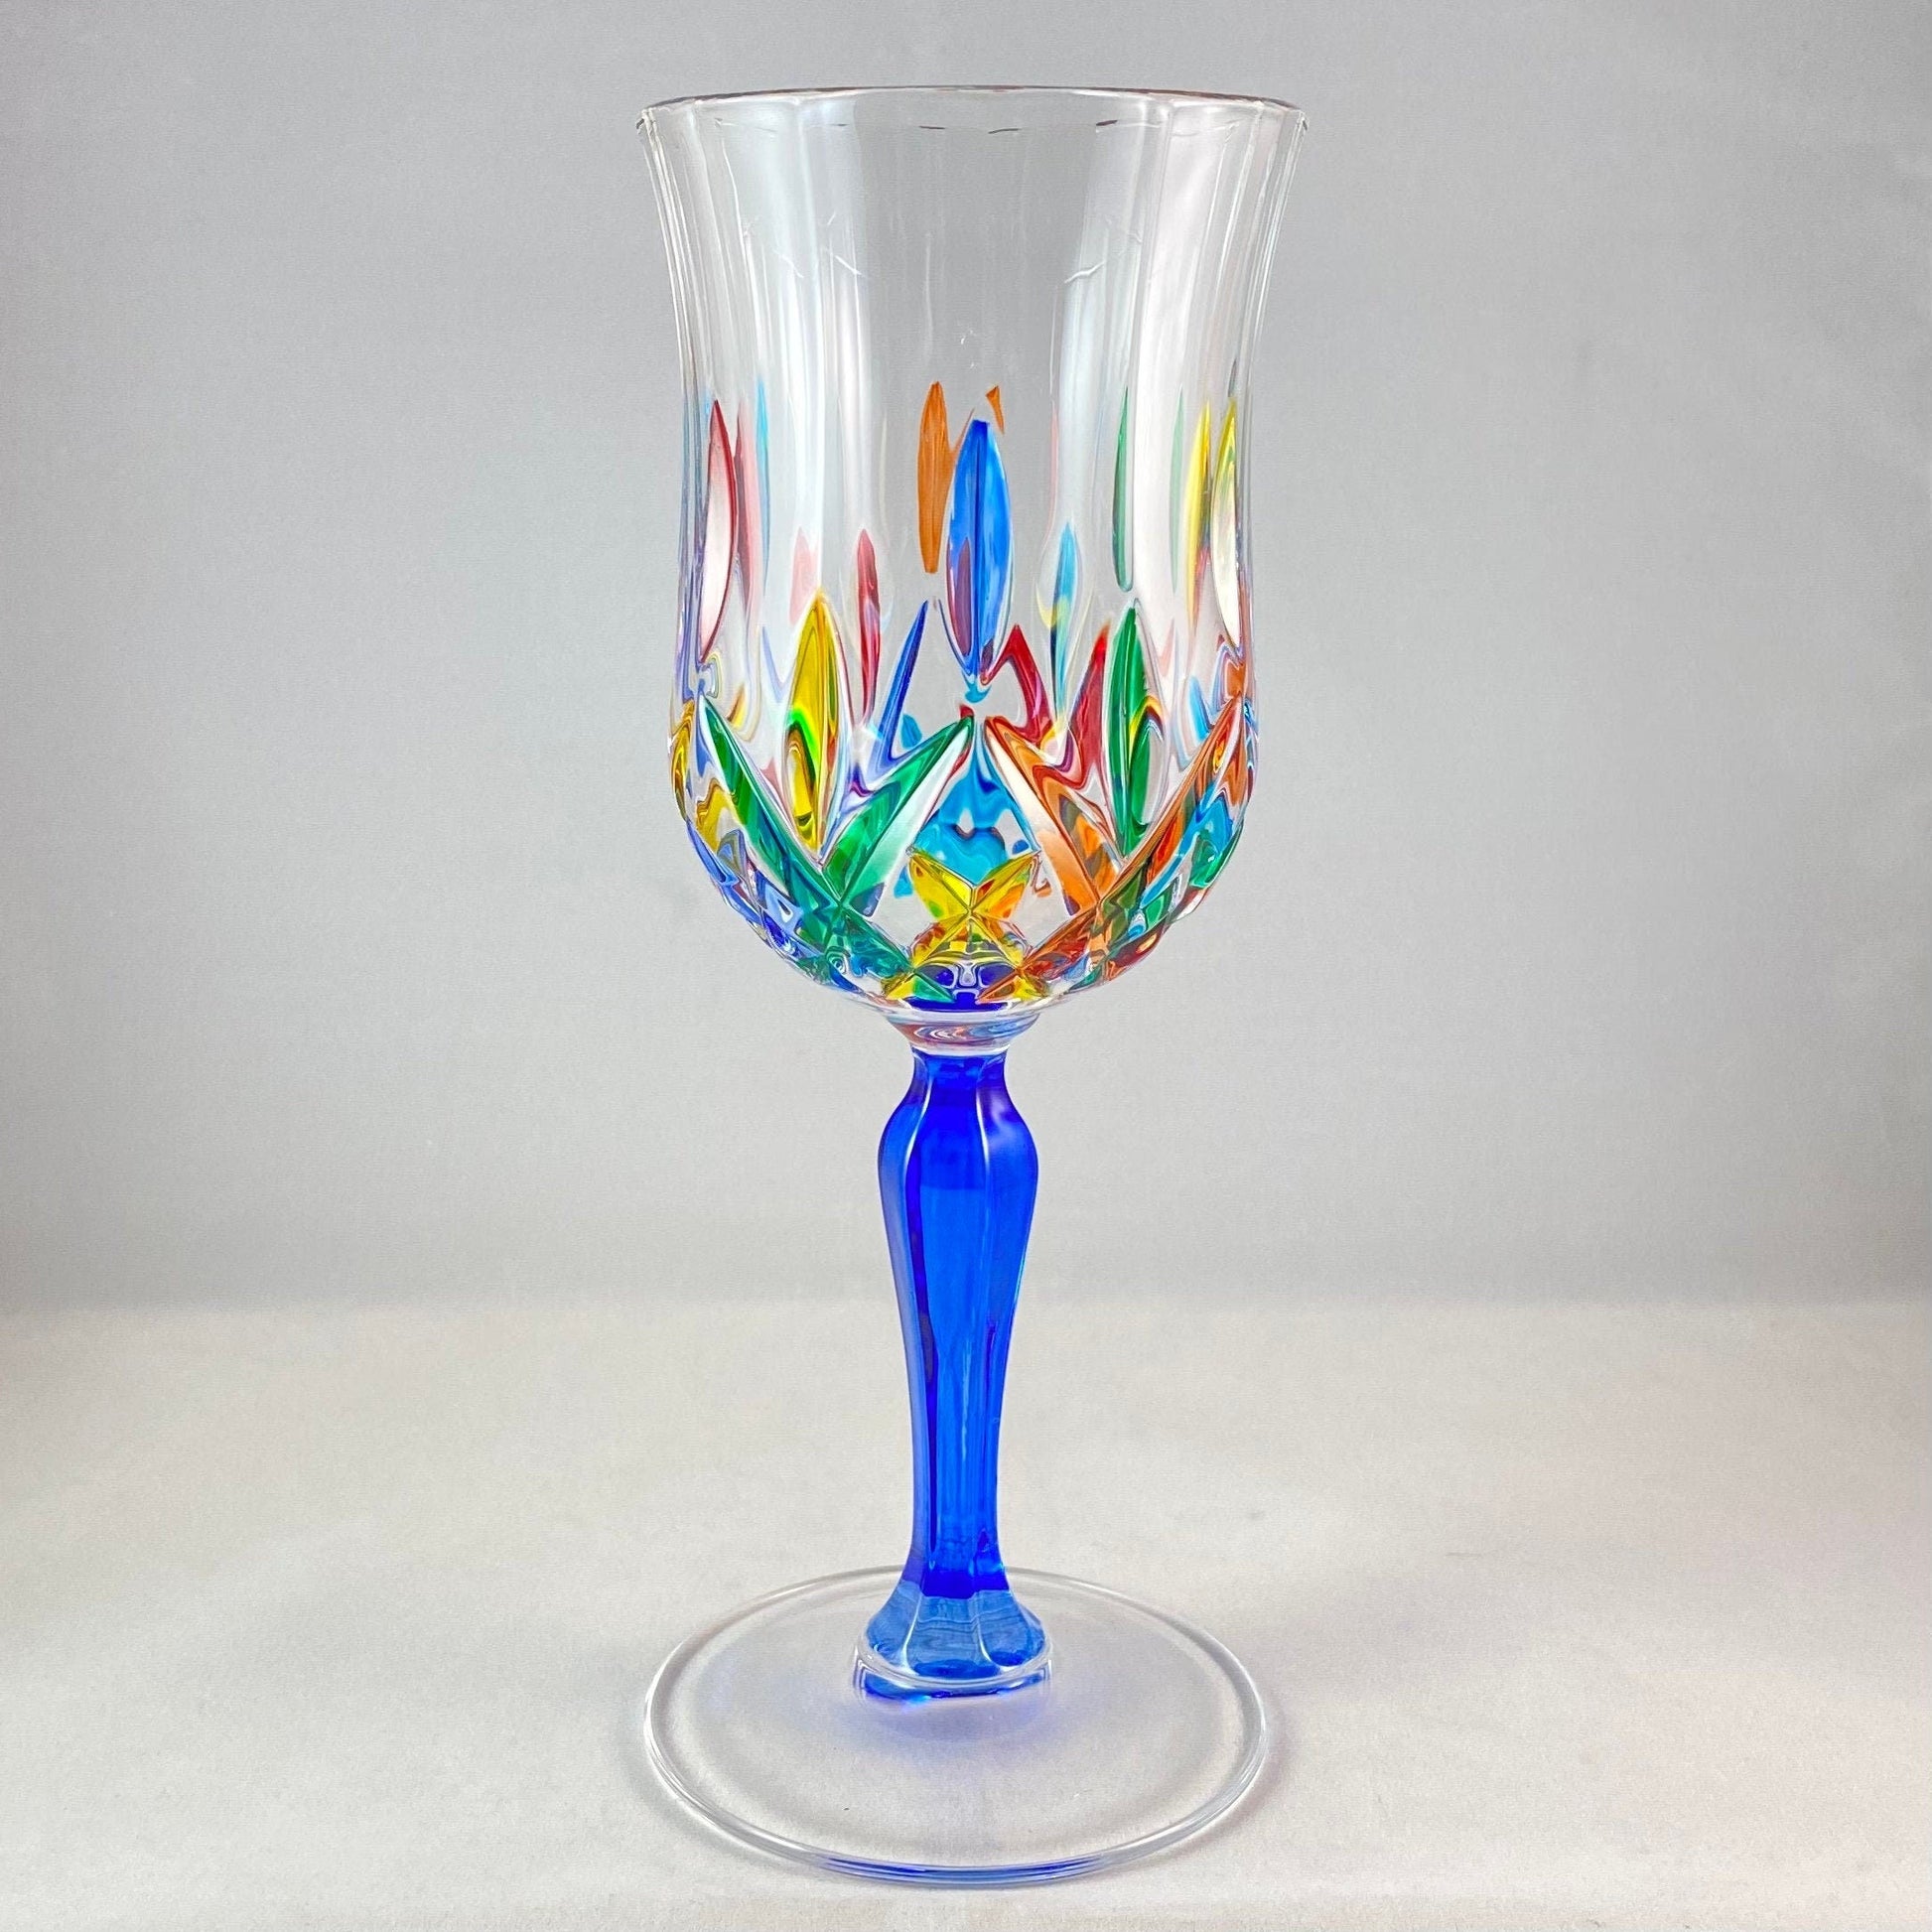 Blue Stem Opera Venetian Glass Wine Glass - Handmade in Italy, Colorful Murano Glass